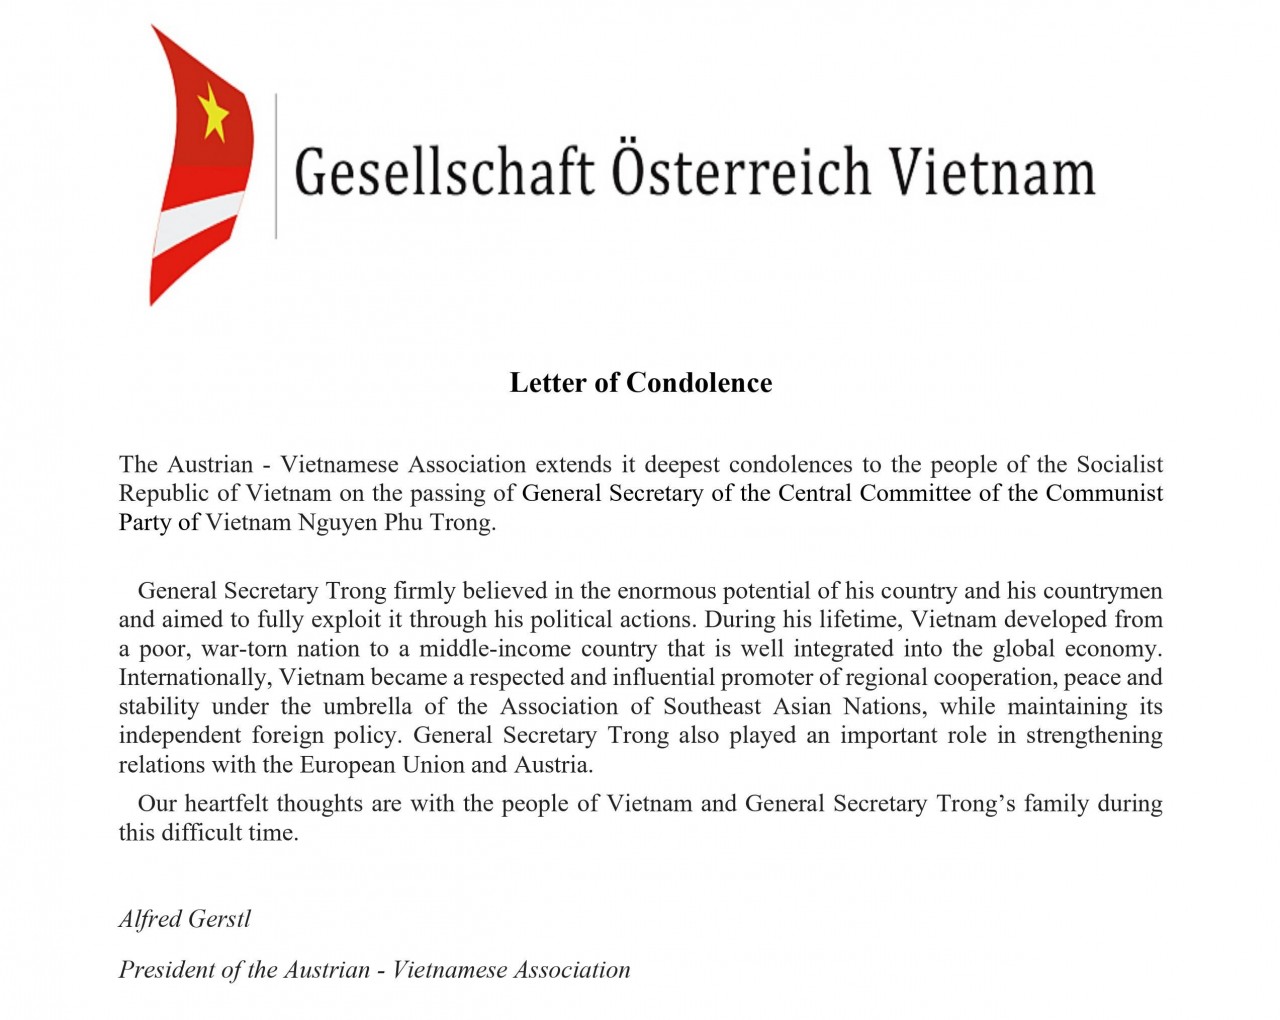 letter of condolence from austrian vietnamese association